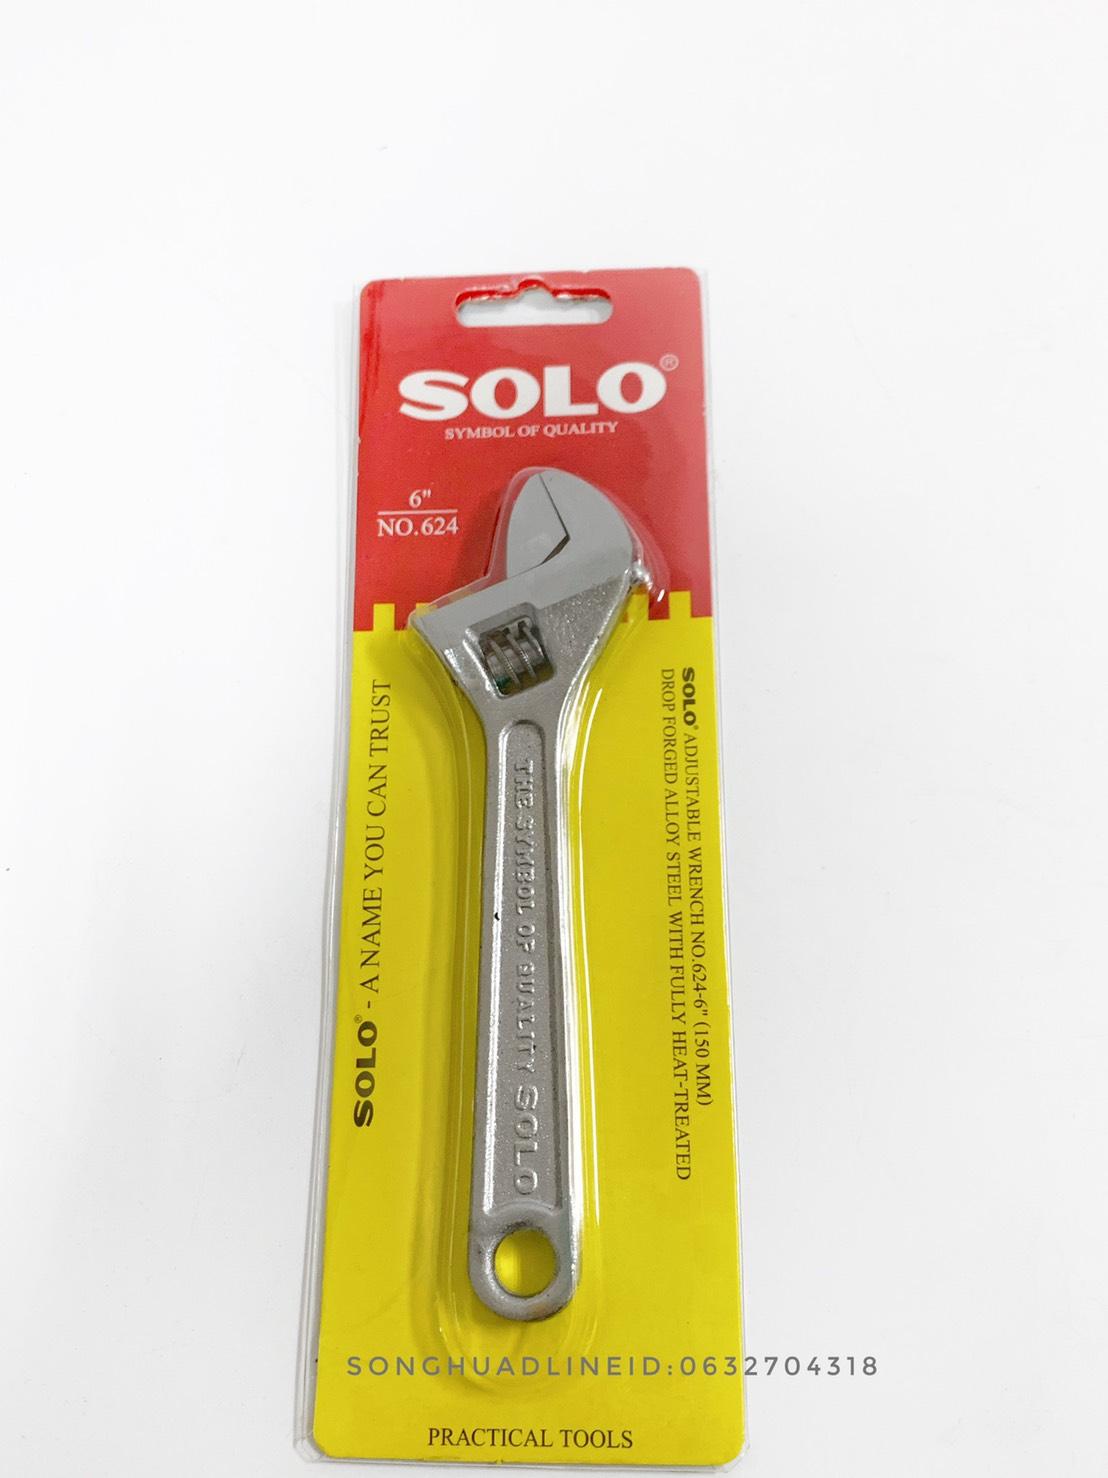 SOLO โซโล ประแจเลื่อนโซโล No.624 ประแจเลื่อน ประแจเลื่อนขนาด 12,10,8,6 นิ้ว สินค้าพร้อมส่ง ของแท้ 100%